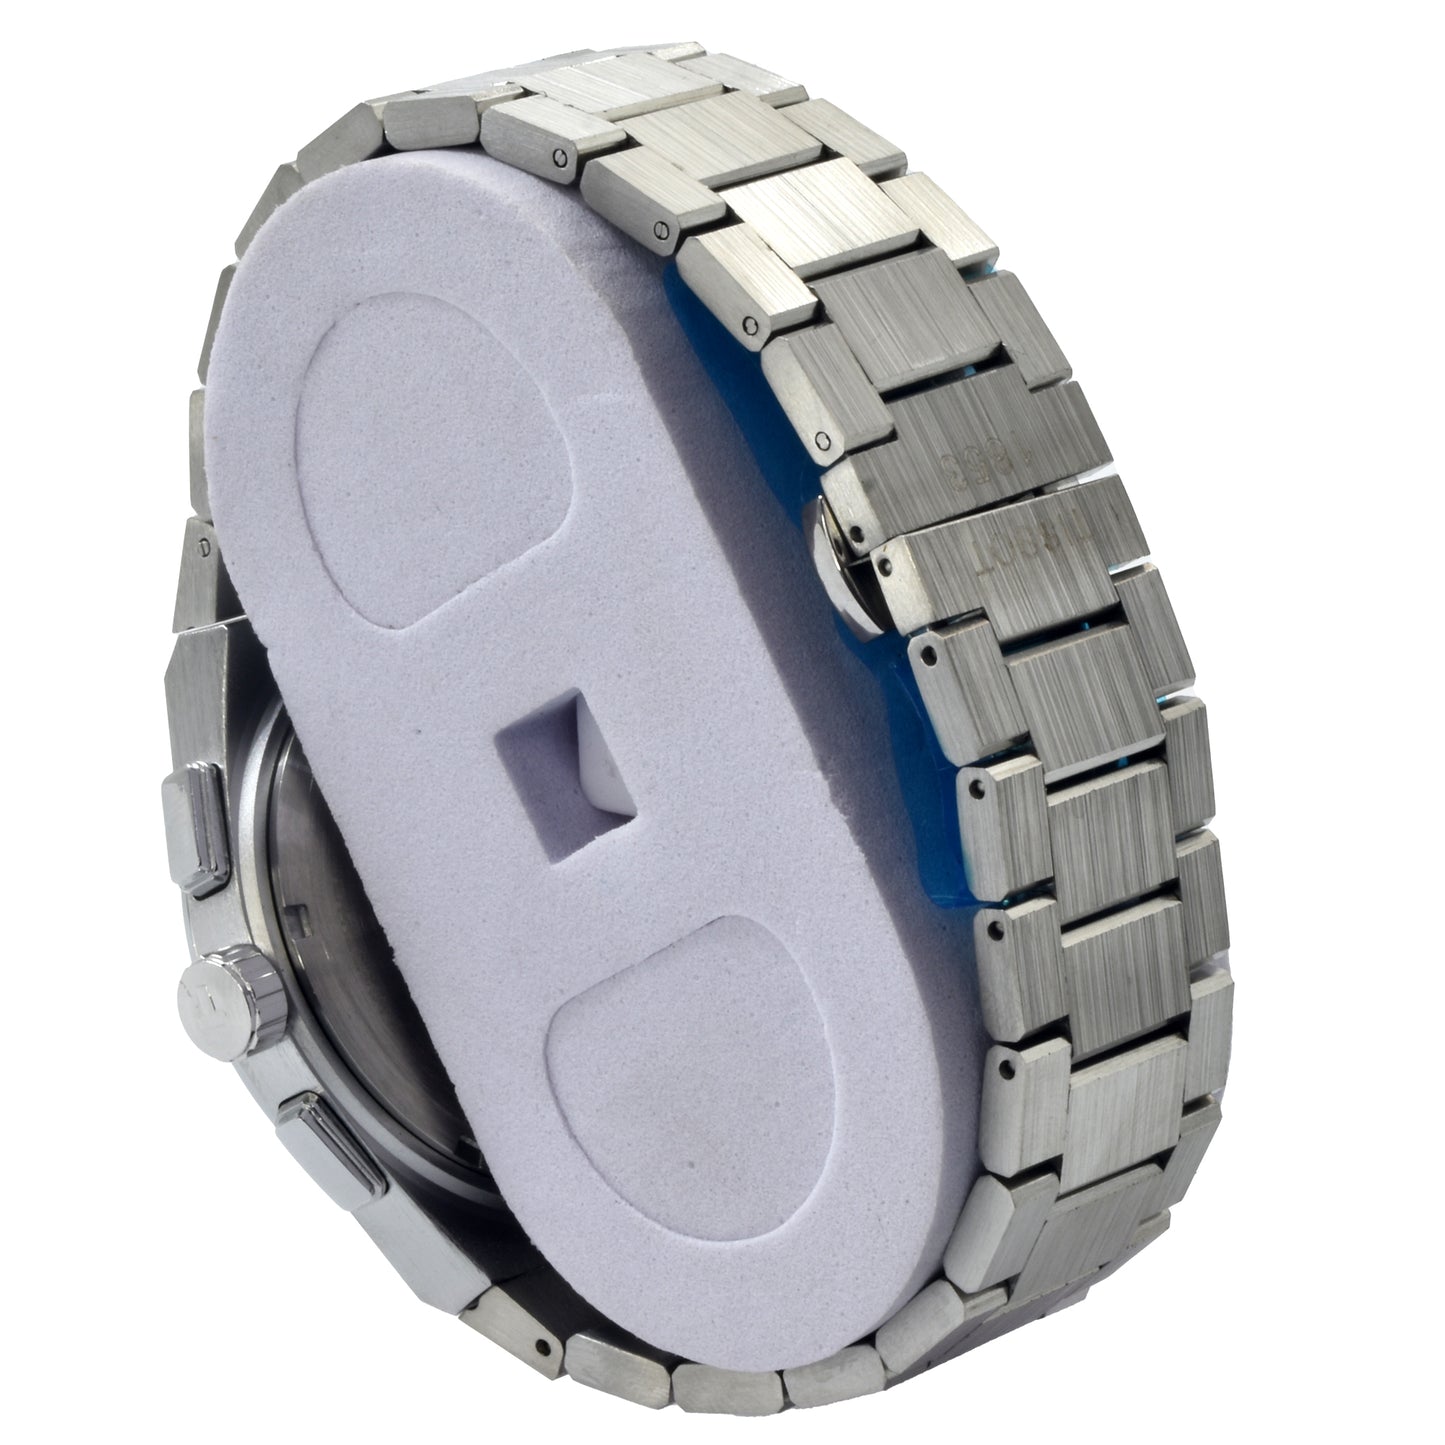 Tissot Premium Quality Chronograph Mens Watch | TST 1002